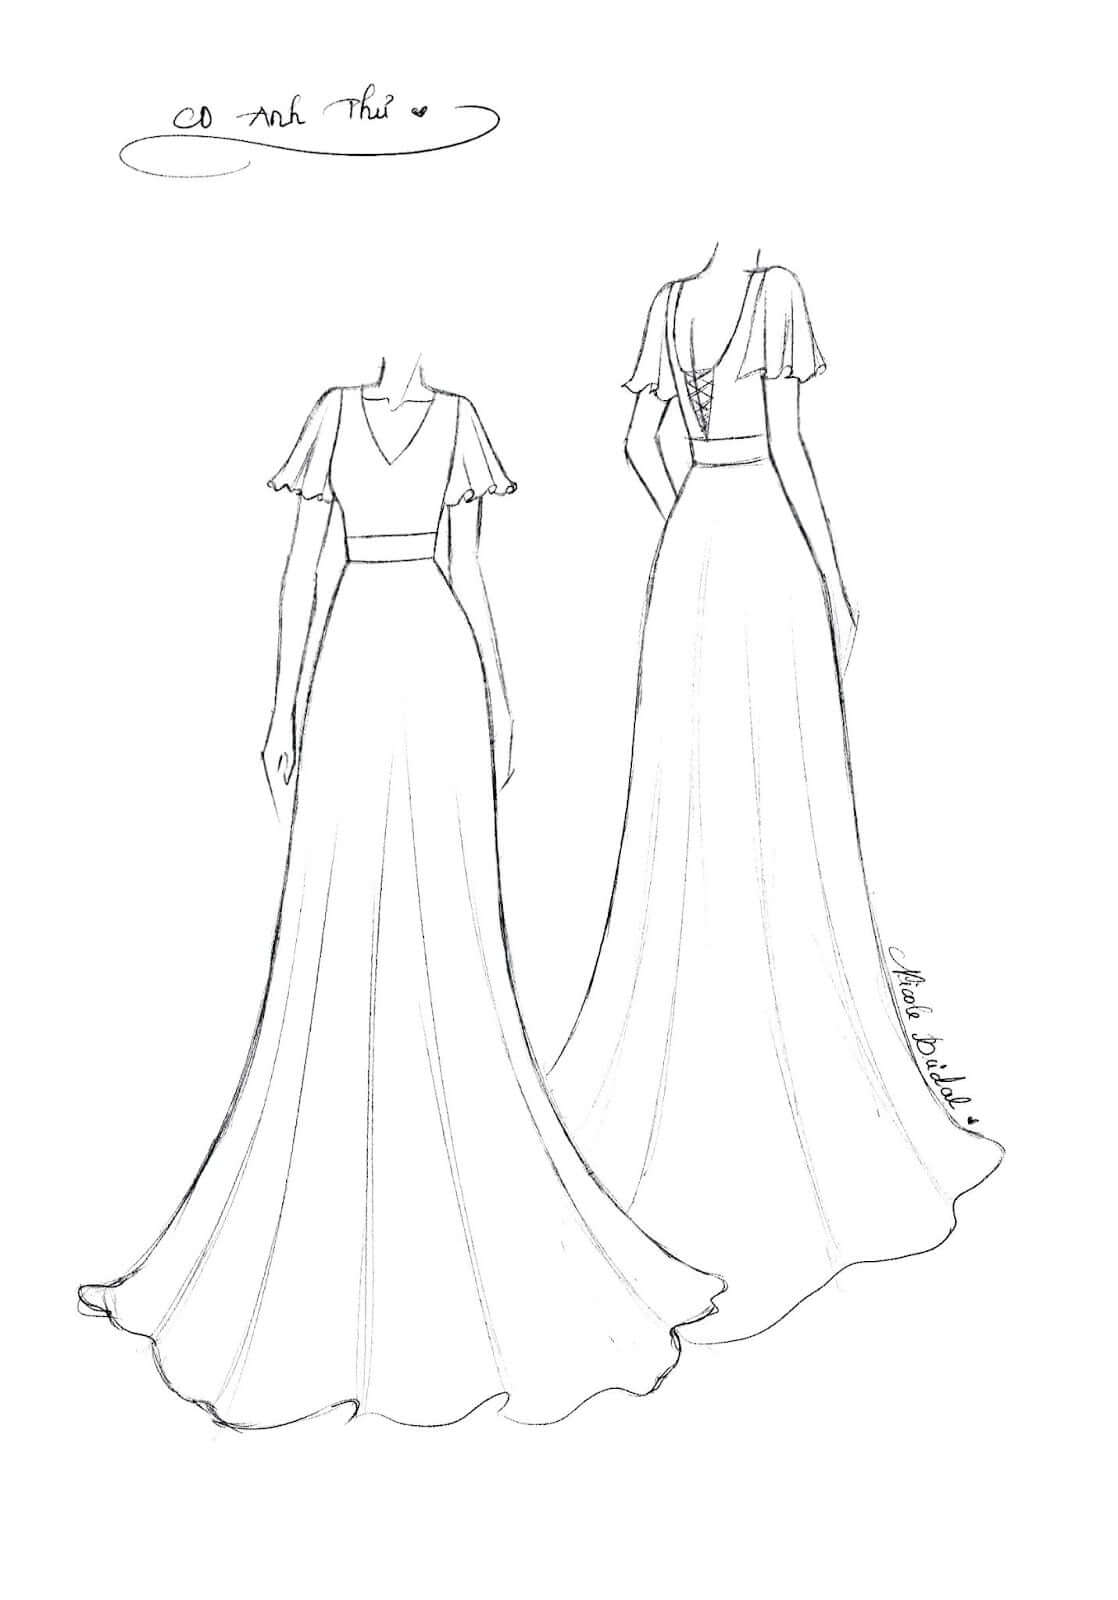 simple wedding dress sketch